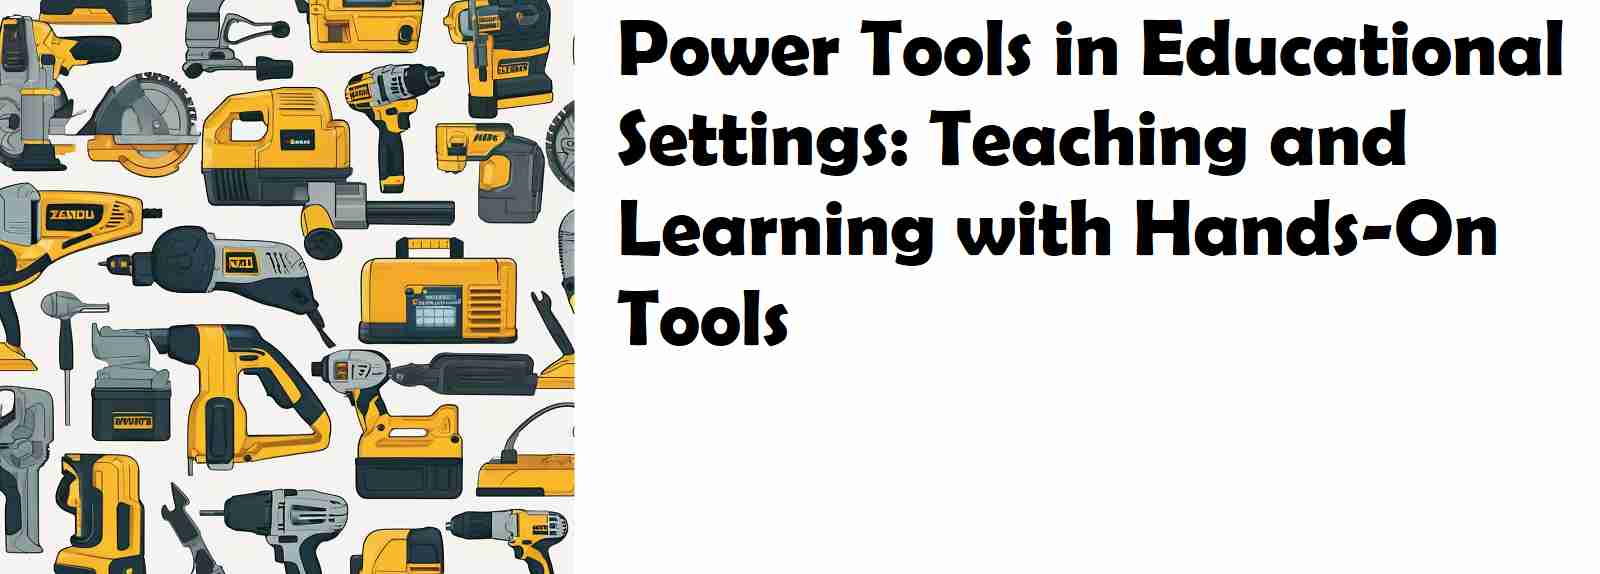 Power Tools in Educational Settings